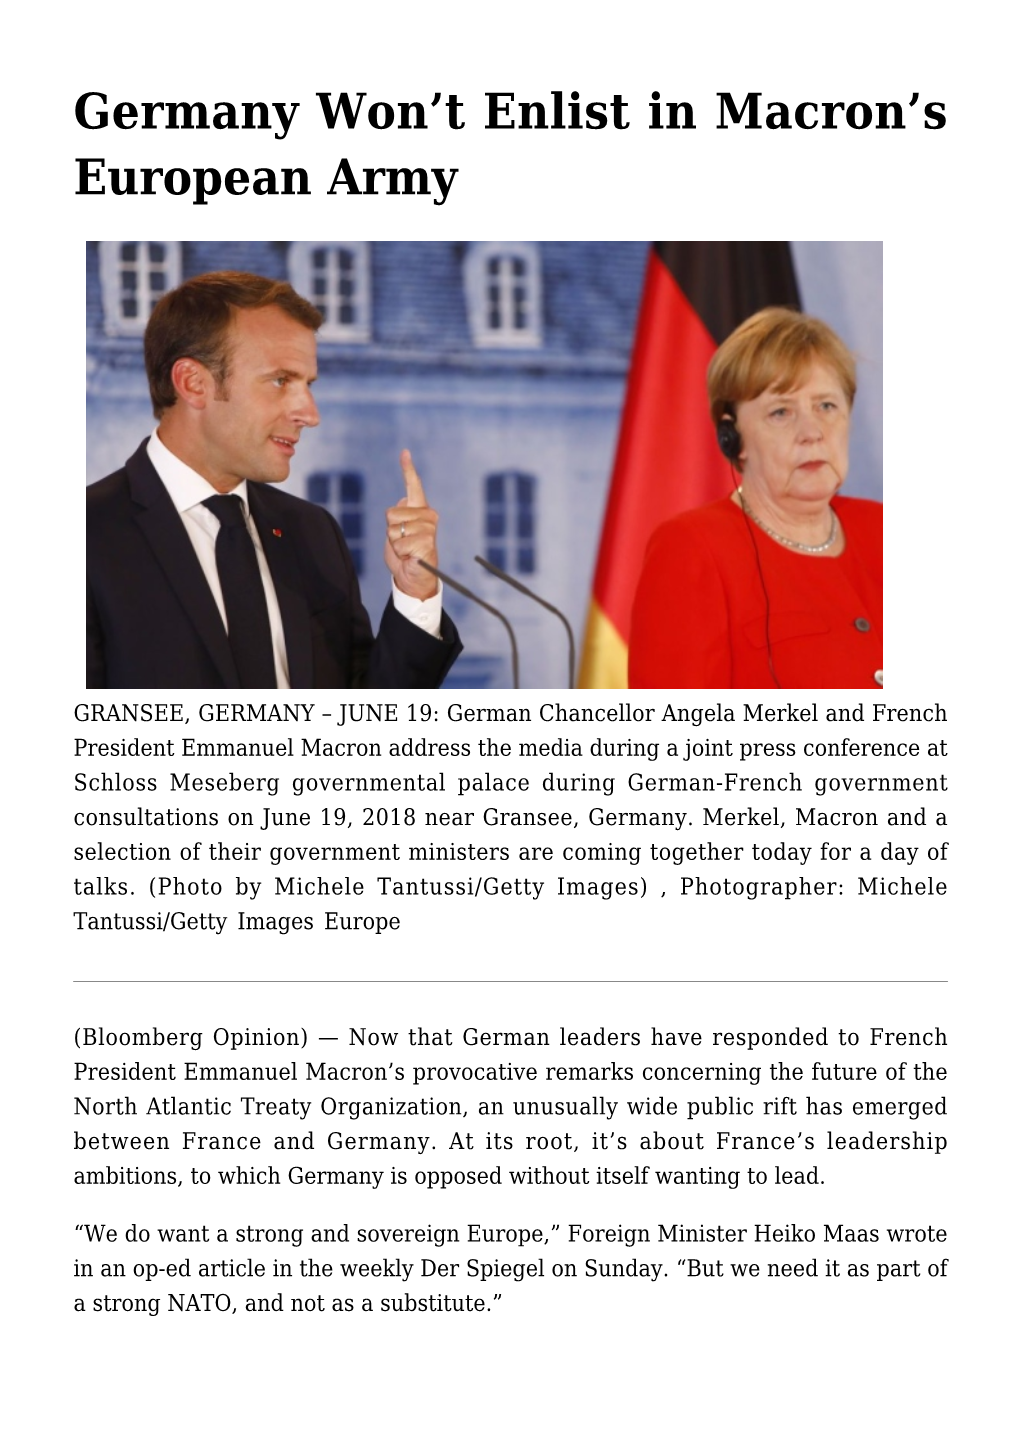 Germany Won't Enlist in Macron's European Army